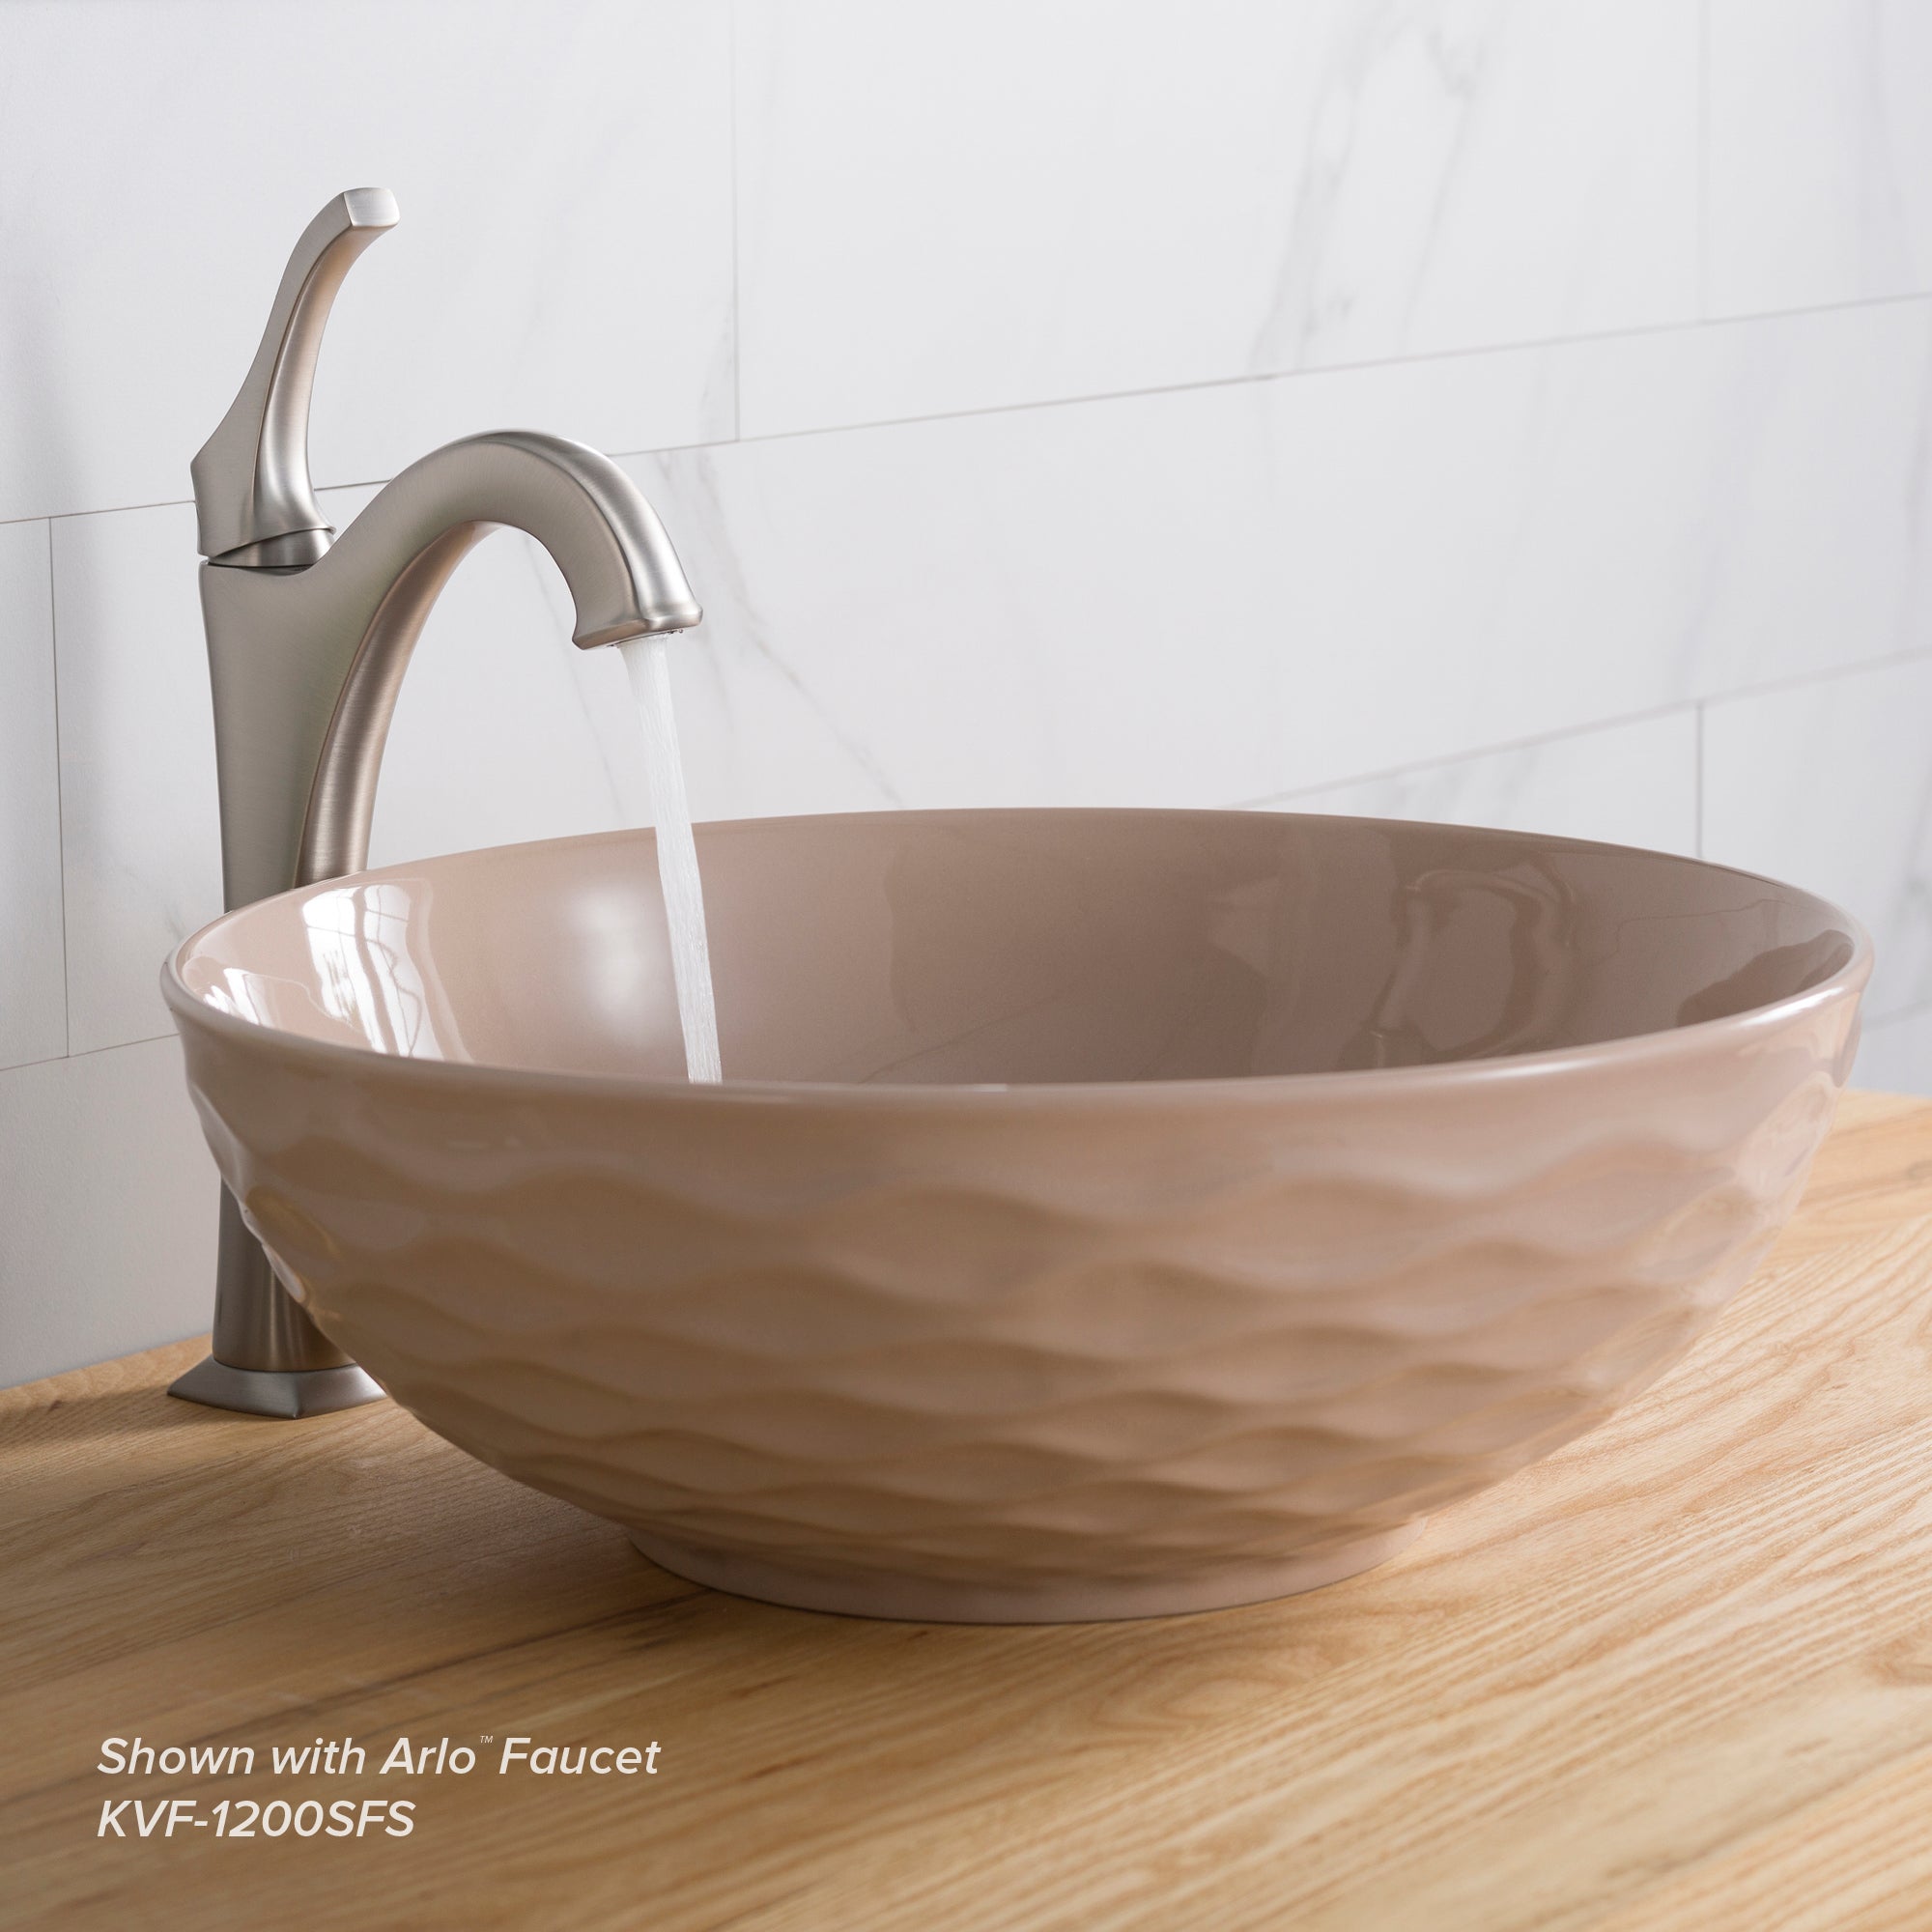 KRAUS Viva Round Beige Porcelain Ceramic Vessel Bathroom Sink with Pop-Up Drain-Bathroom Sinks-DirectSinks